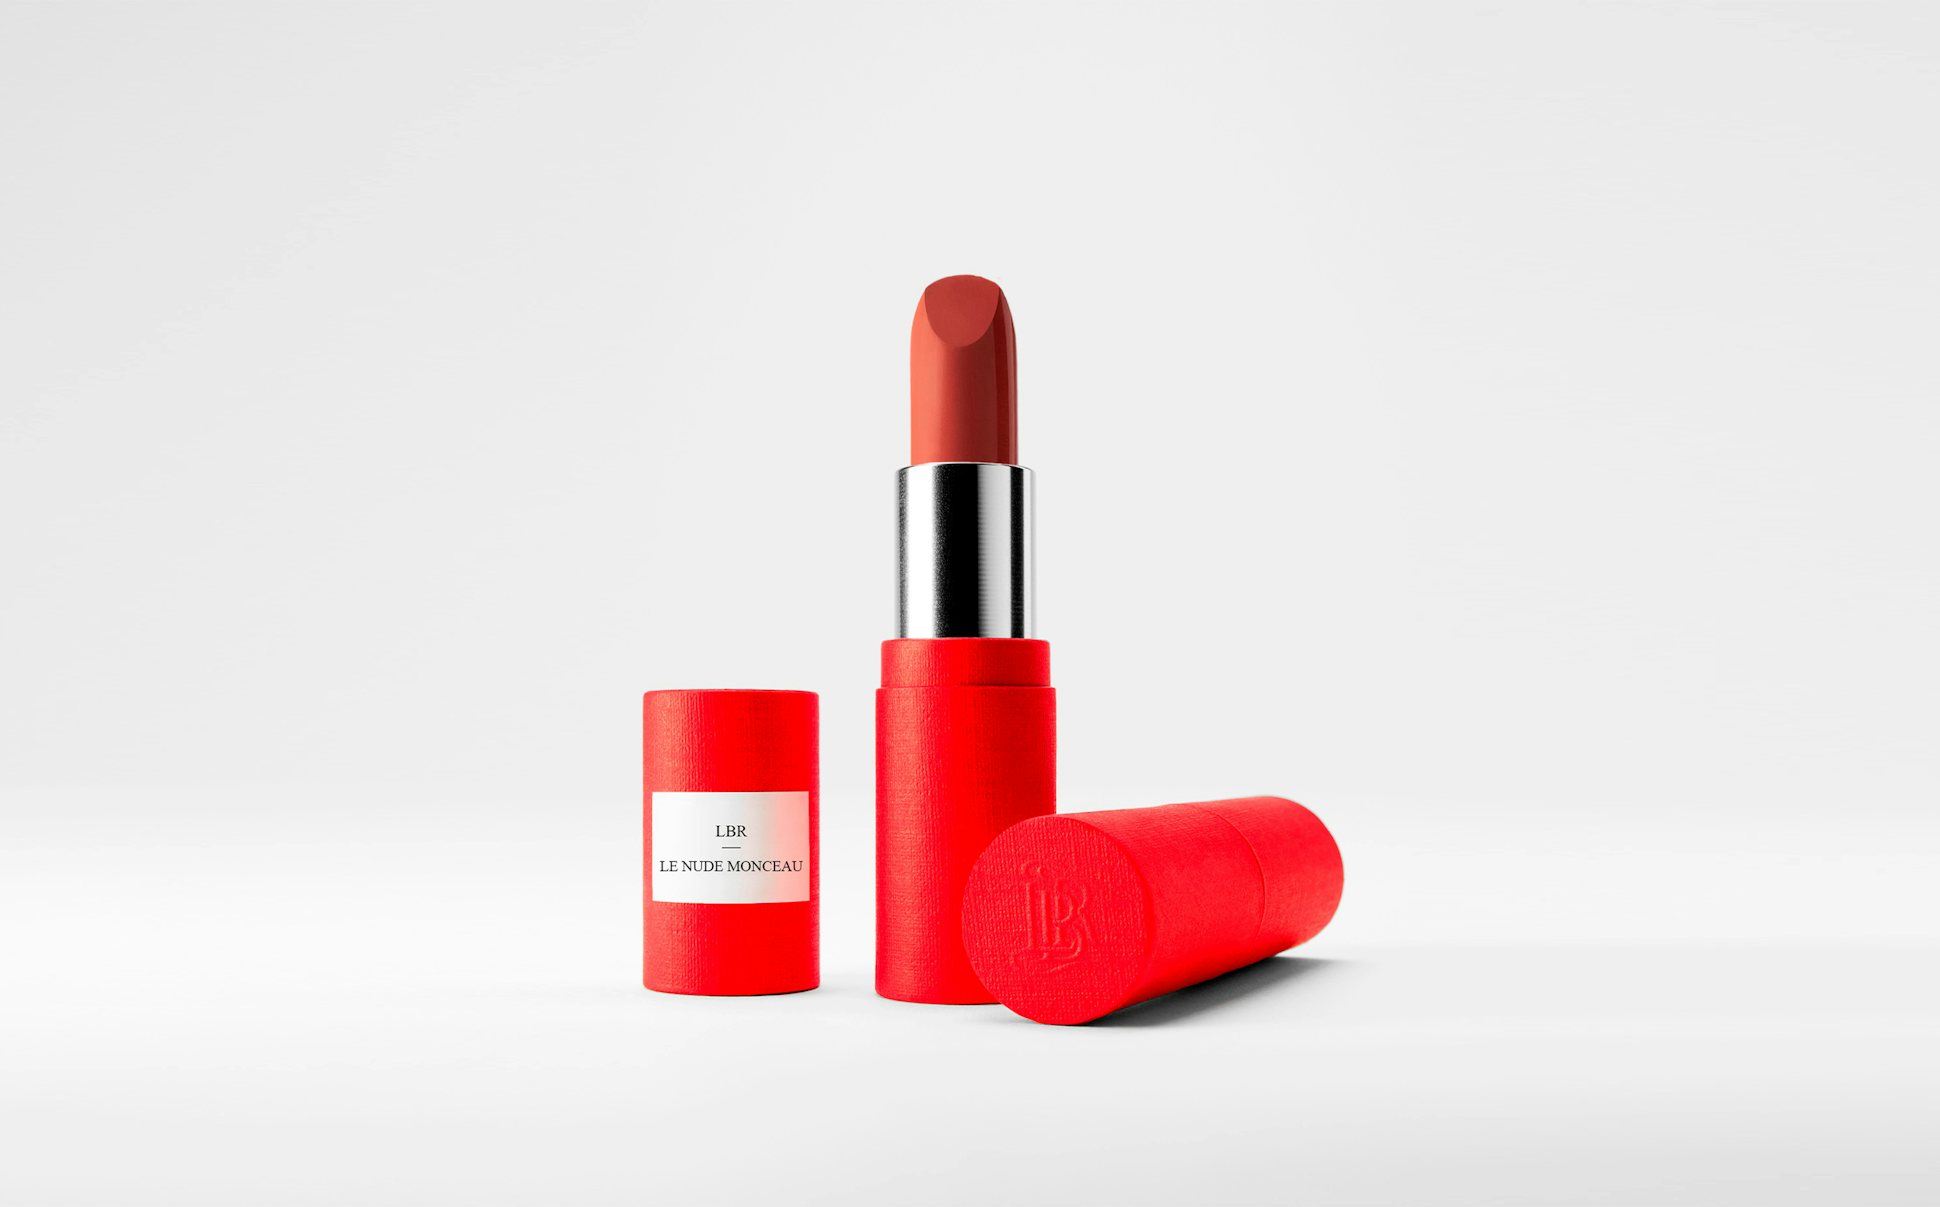 La bouche rouge Le Nude Monceau lipstick in the red paper case